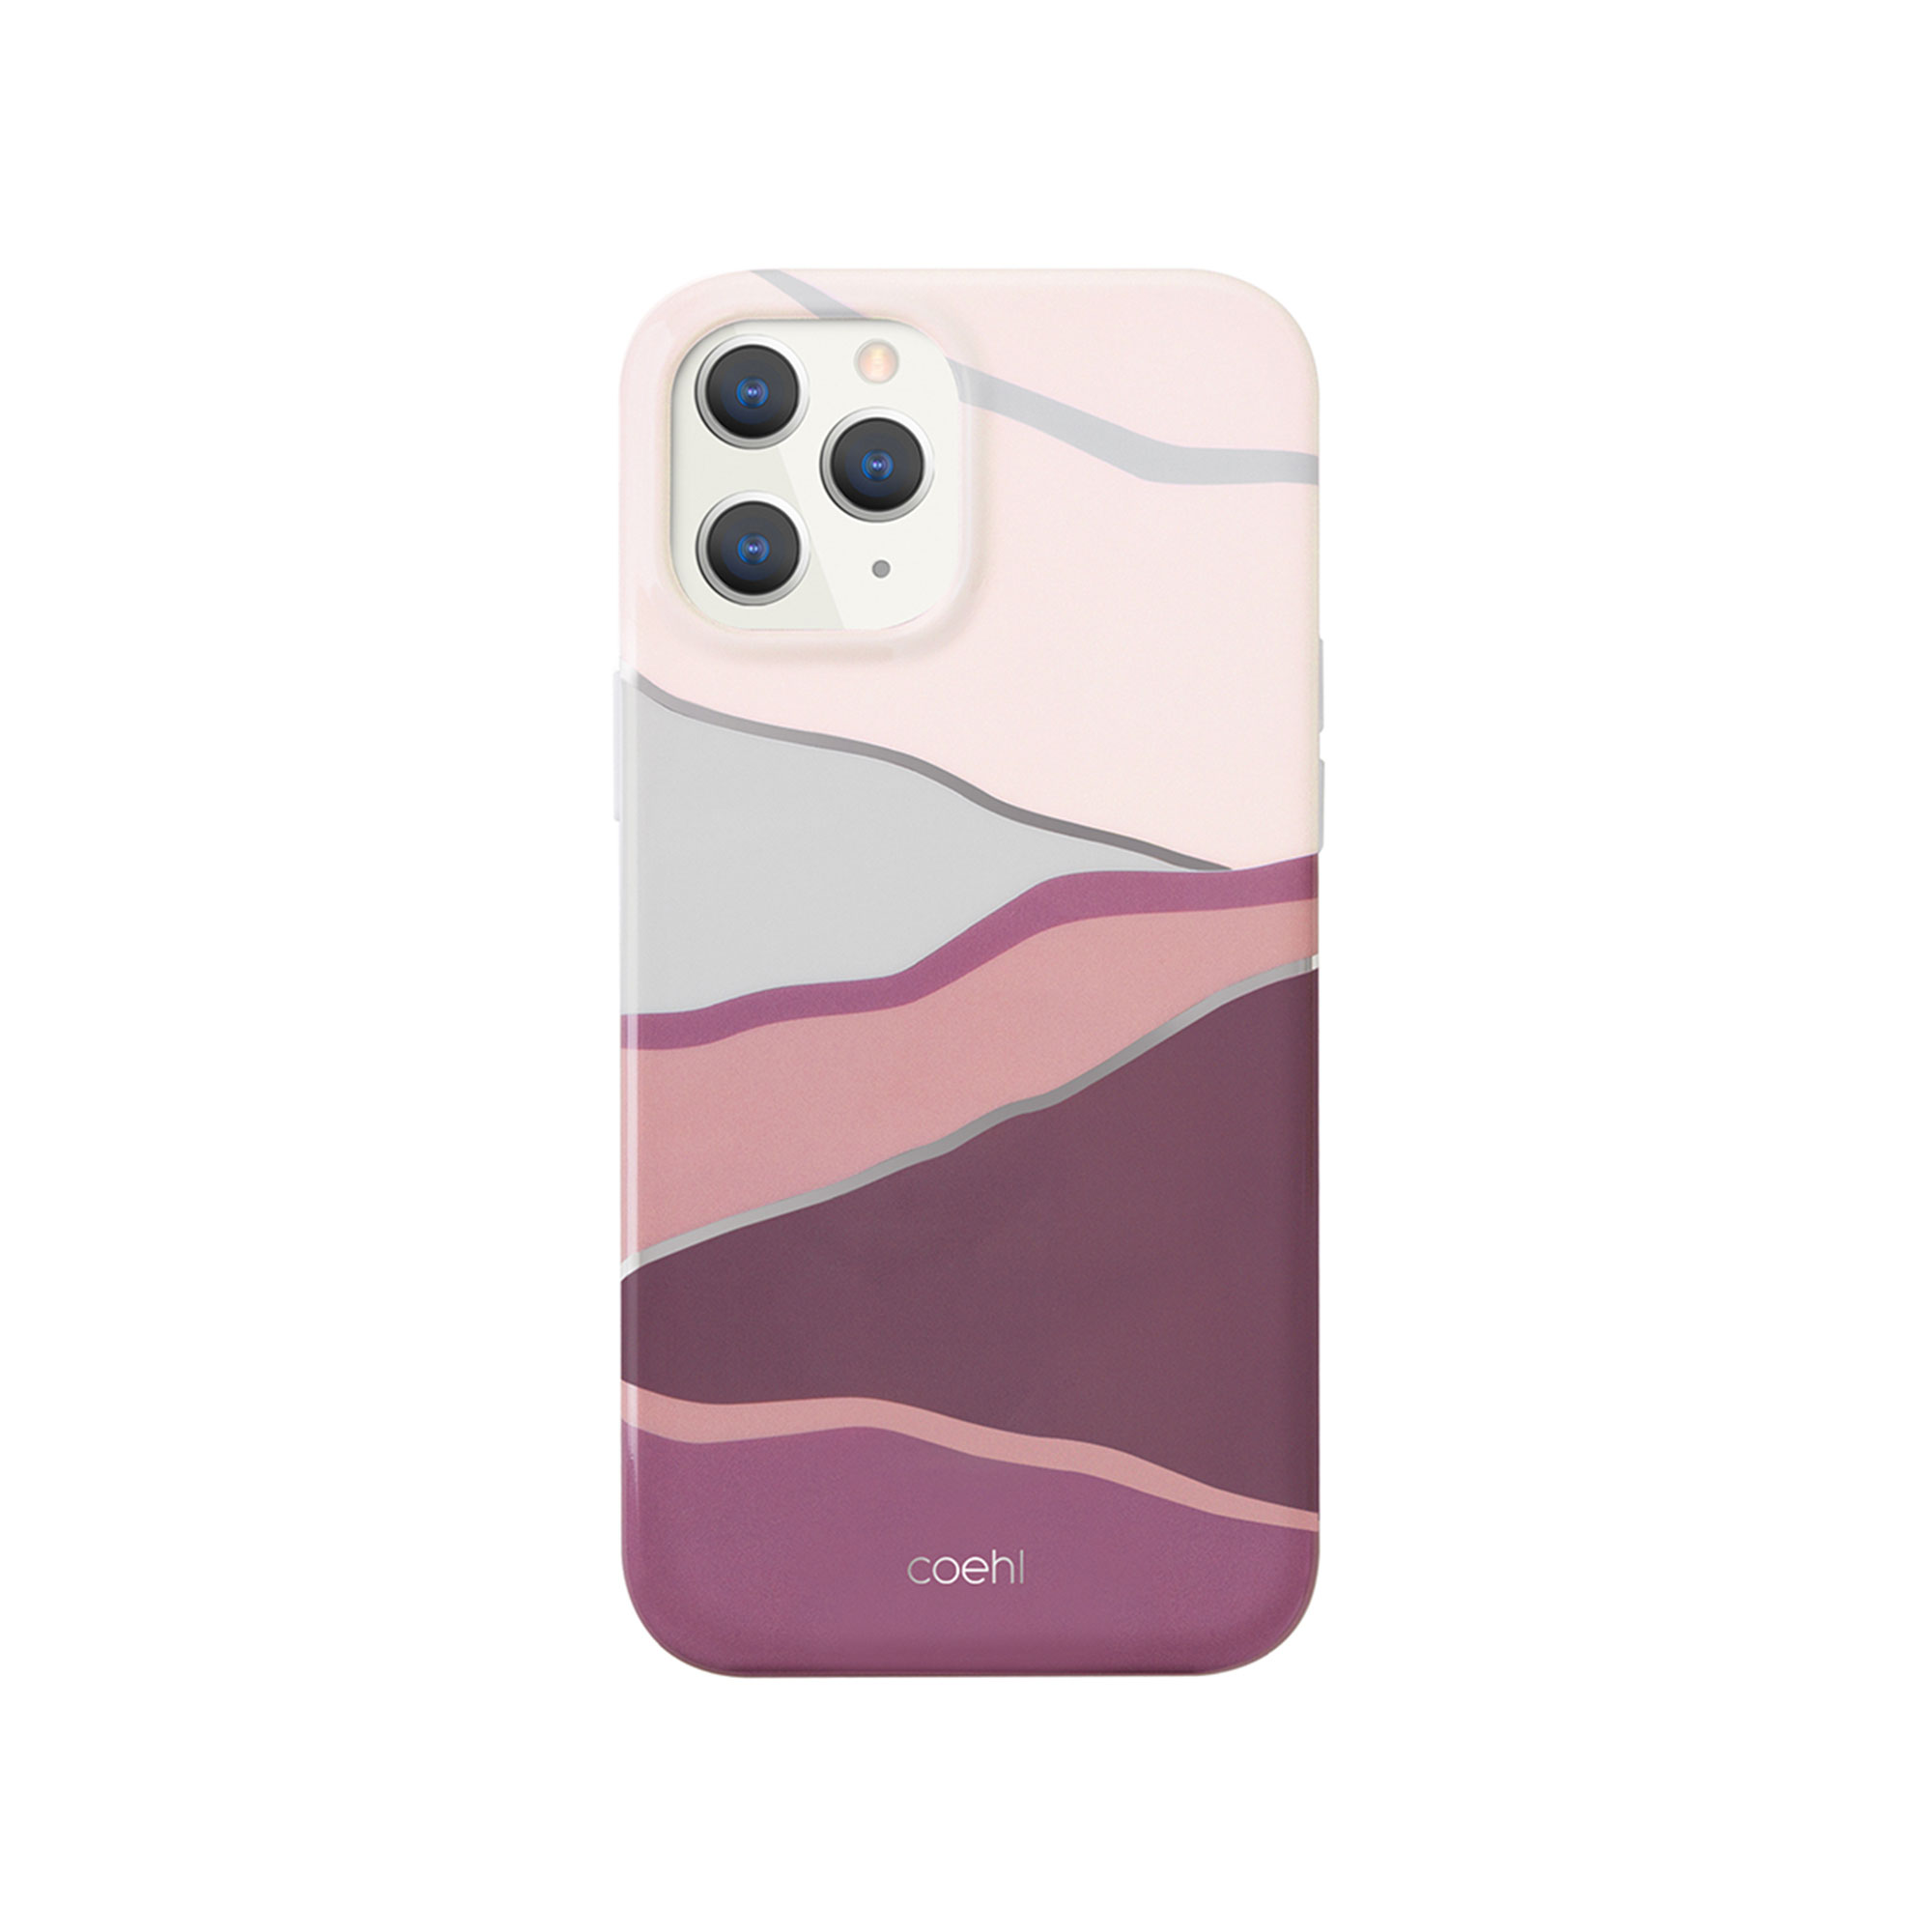 Фото — Чехол для смартфона Uniq для iPhone 12/12 Pro COEHL Ciel, розовый